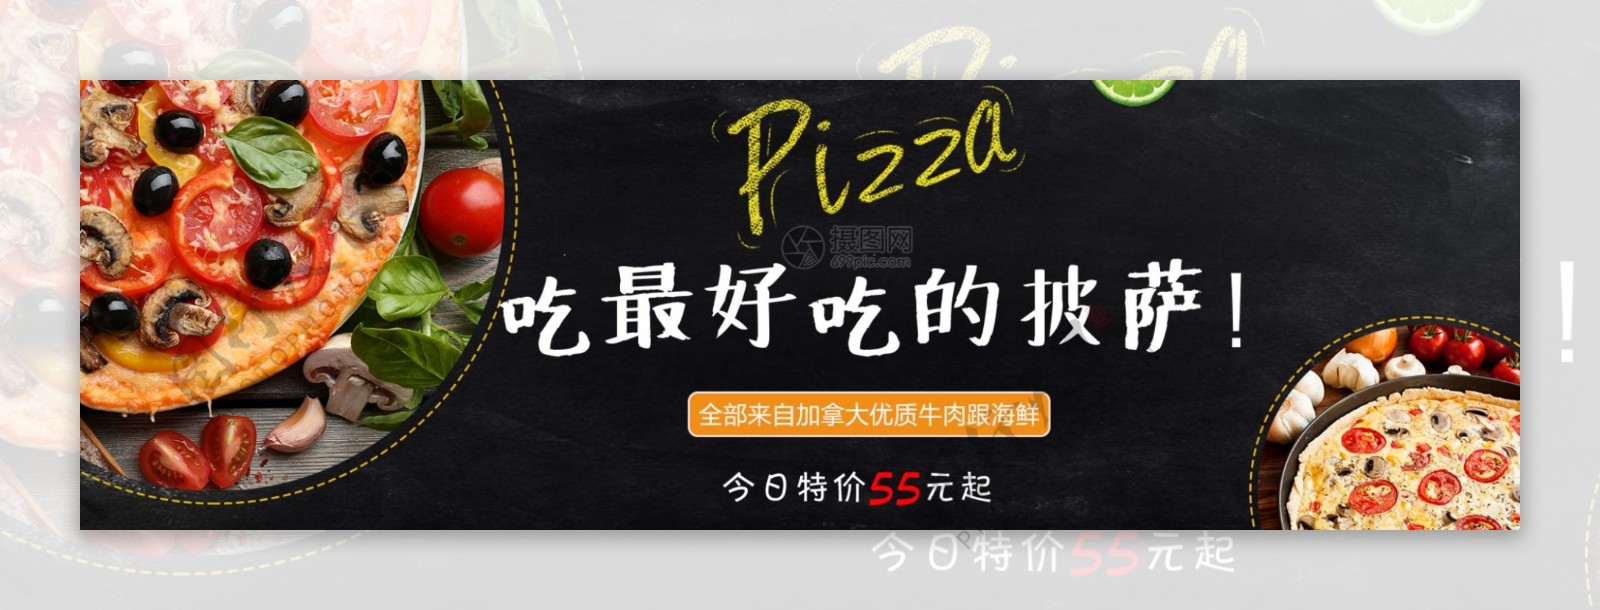 吃最好吃的披萨淘宝banner